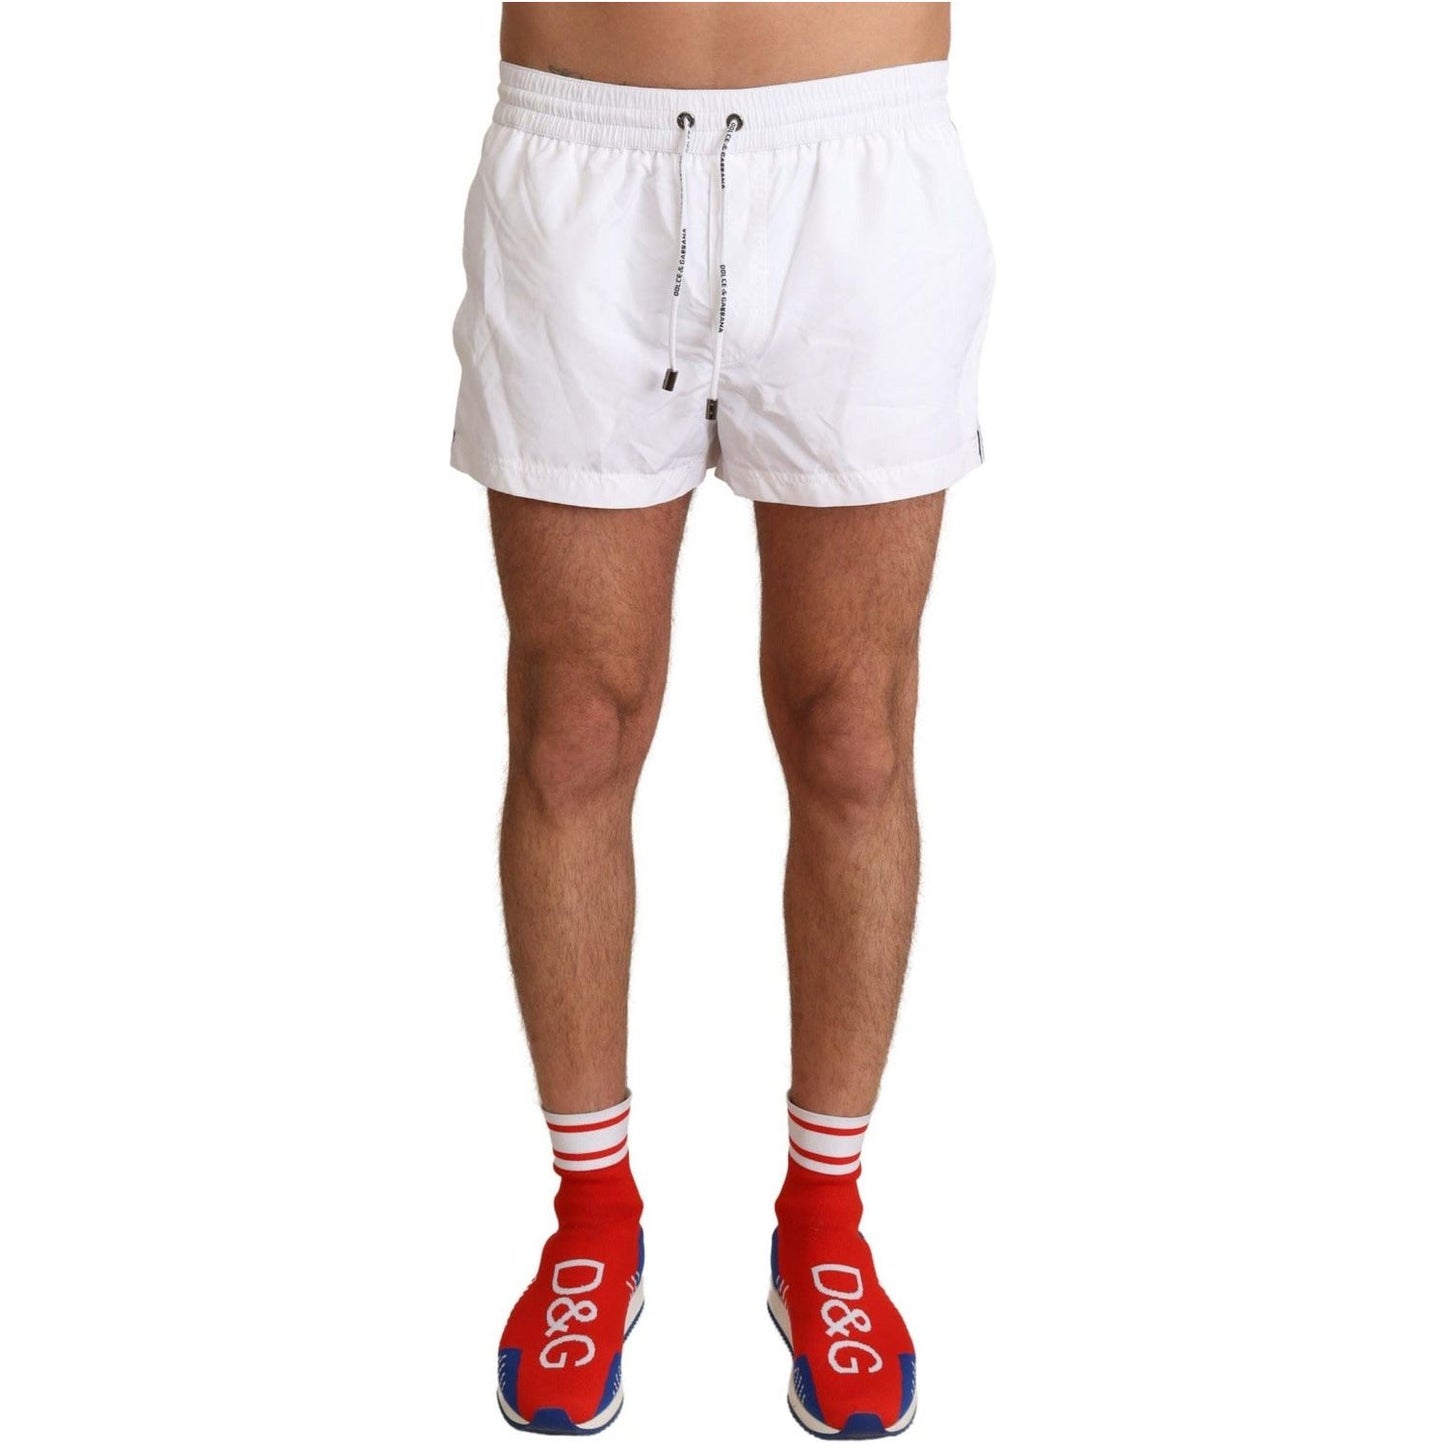 Dolce & Gabbana Elegant White KING Motive Swim Trunks white-king-mens-beachwear-swimwear-shorts IMG_2566-scaled-51851dd0-ae8.jpg